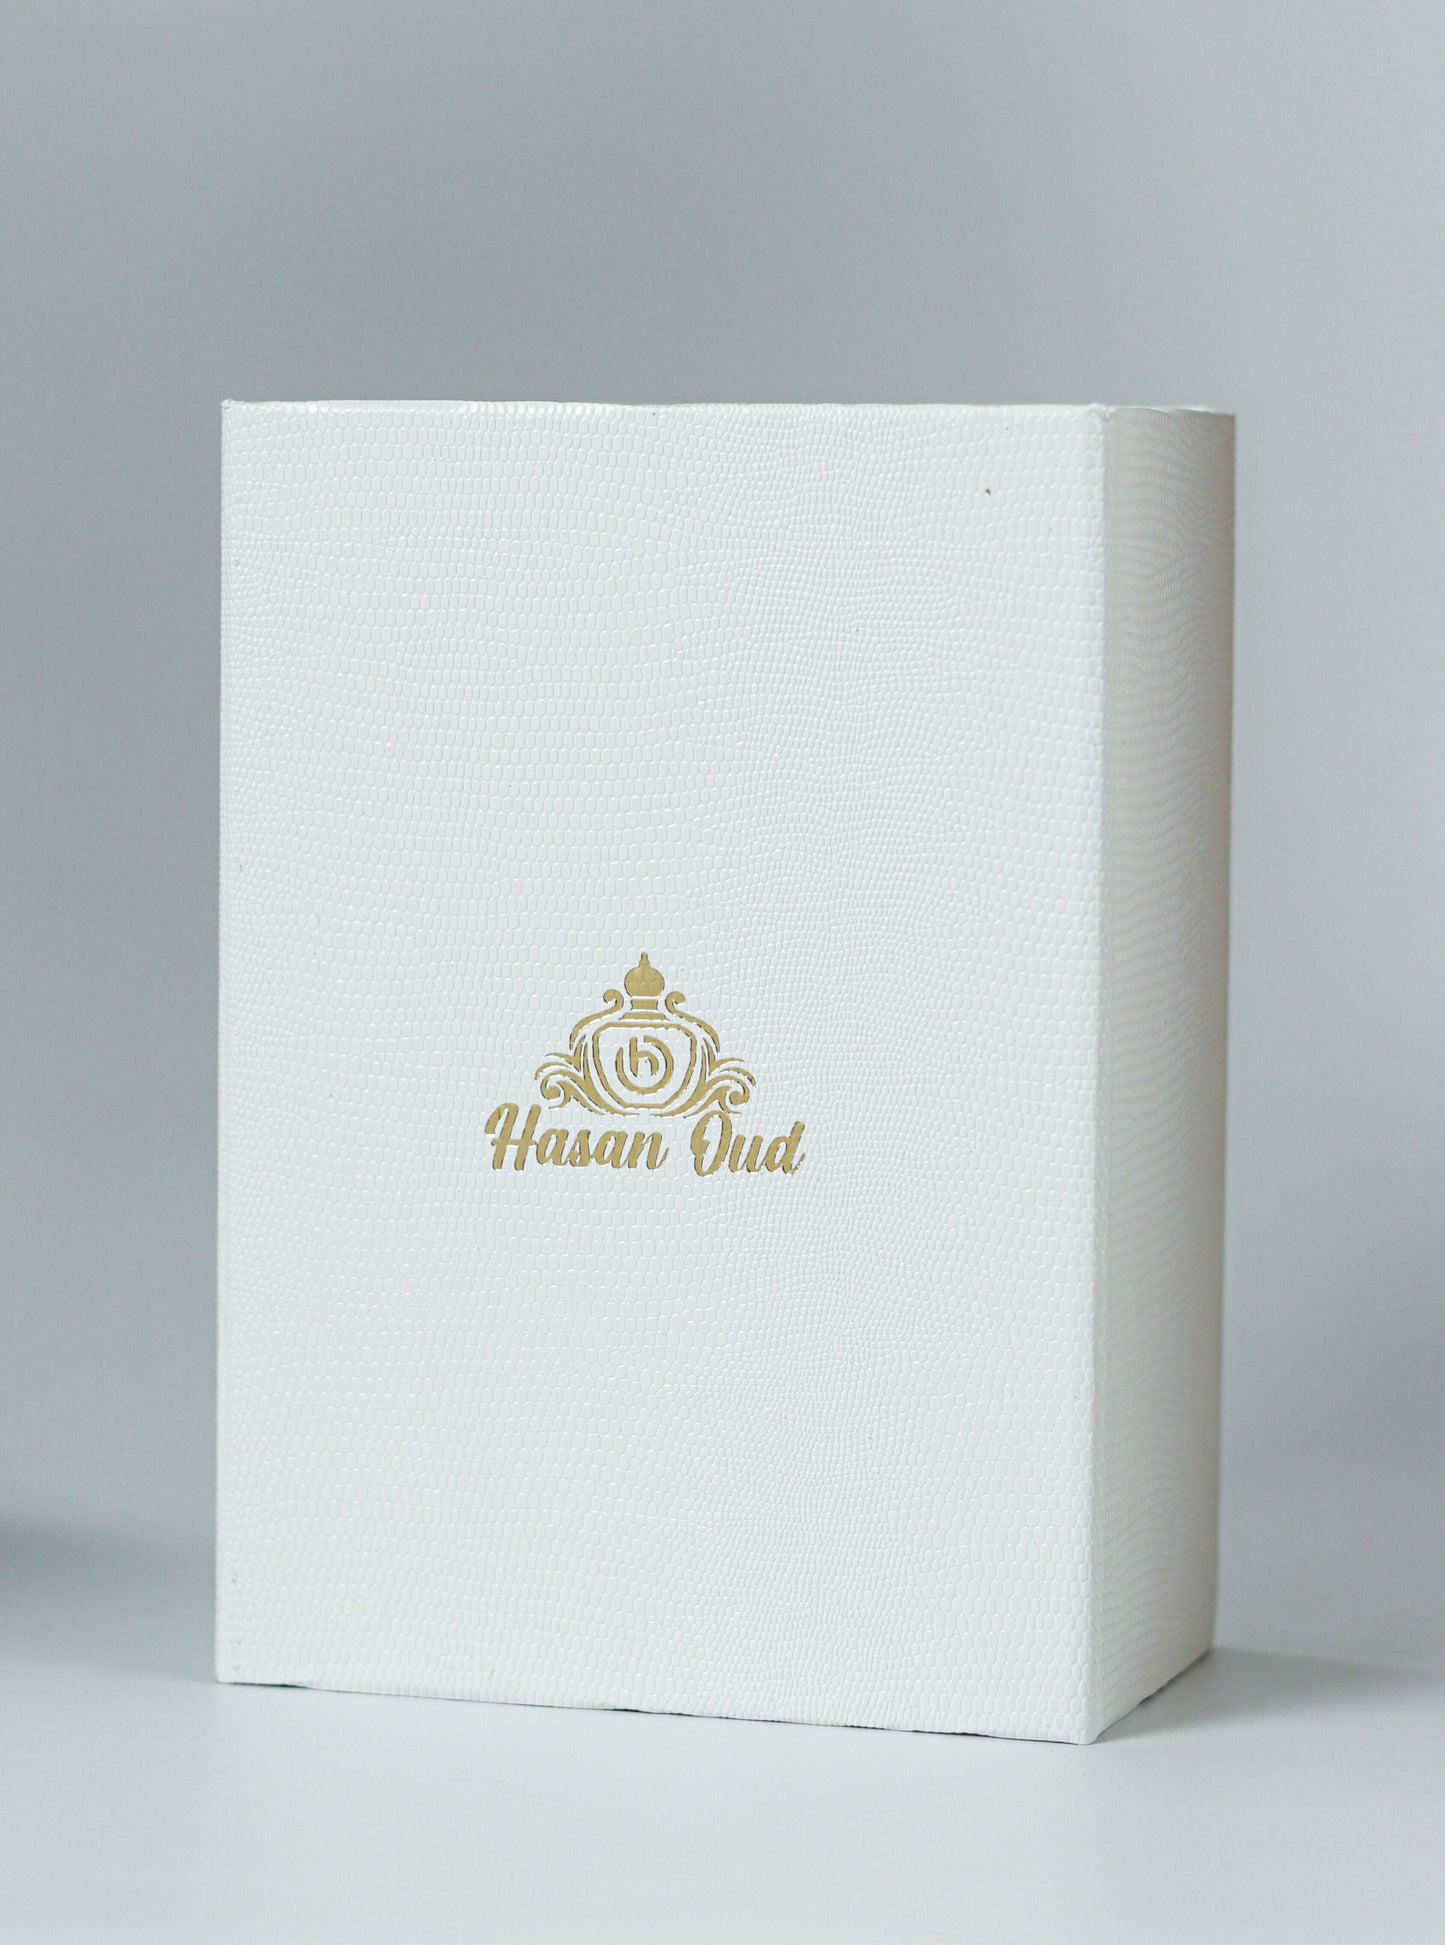 Royal sandal Premium Fragrances Alcohol Free By Hasan Oud